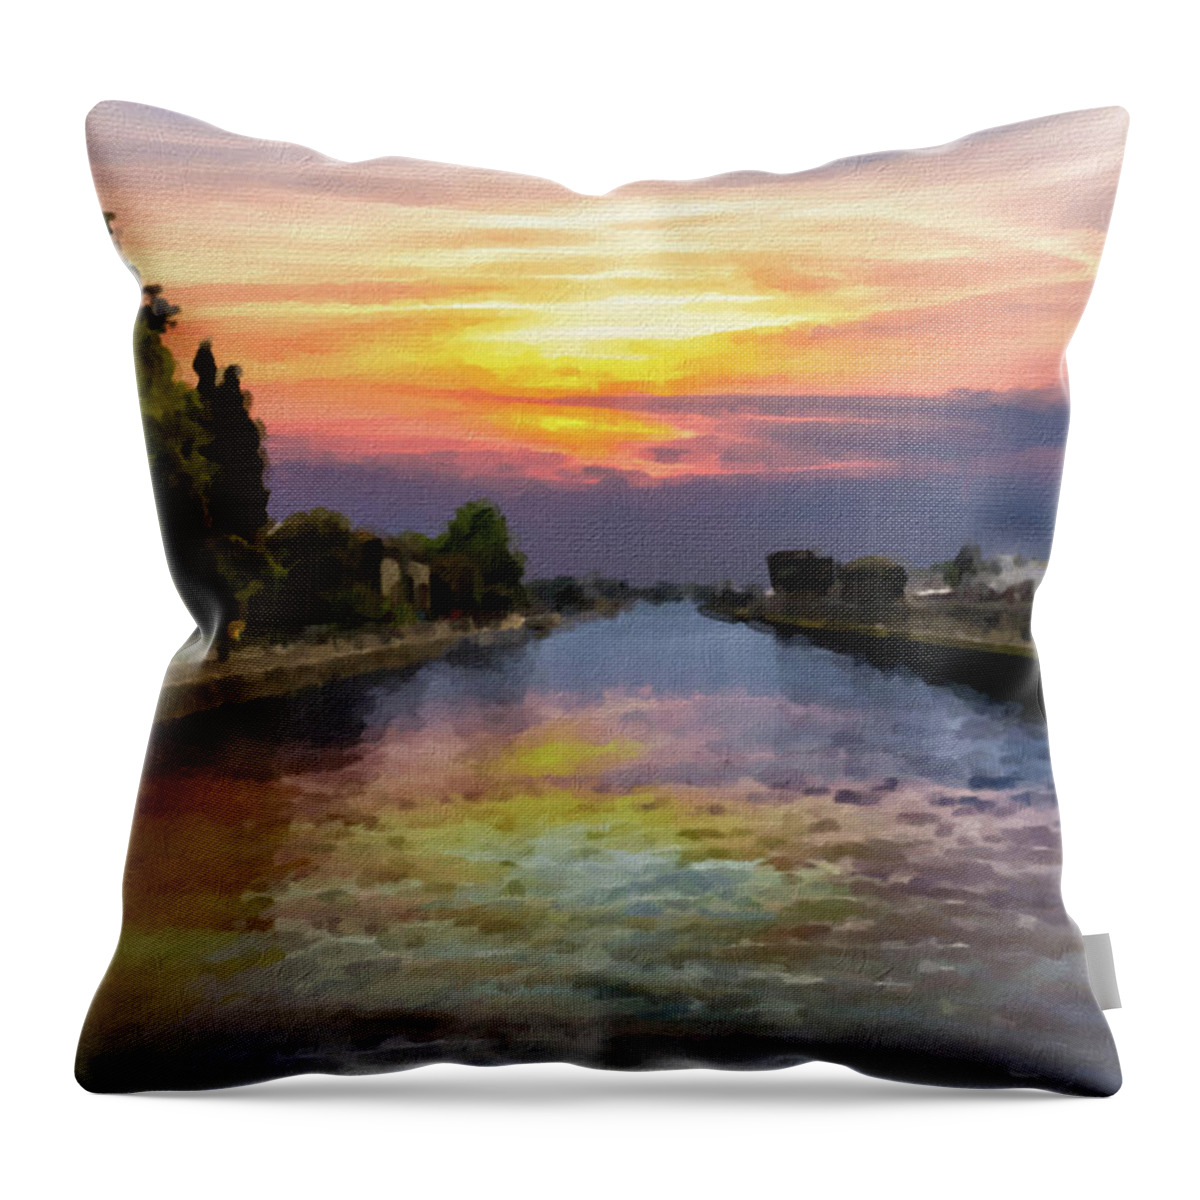 Water Throw Pillow featuring the photograph Ballard Locks at Sunrise #1 by Darryl Brooks